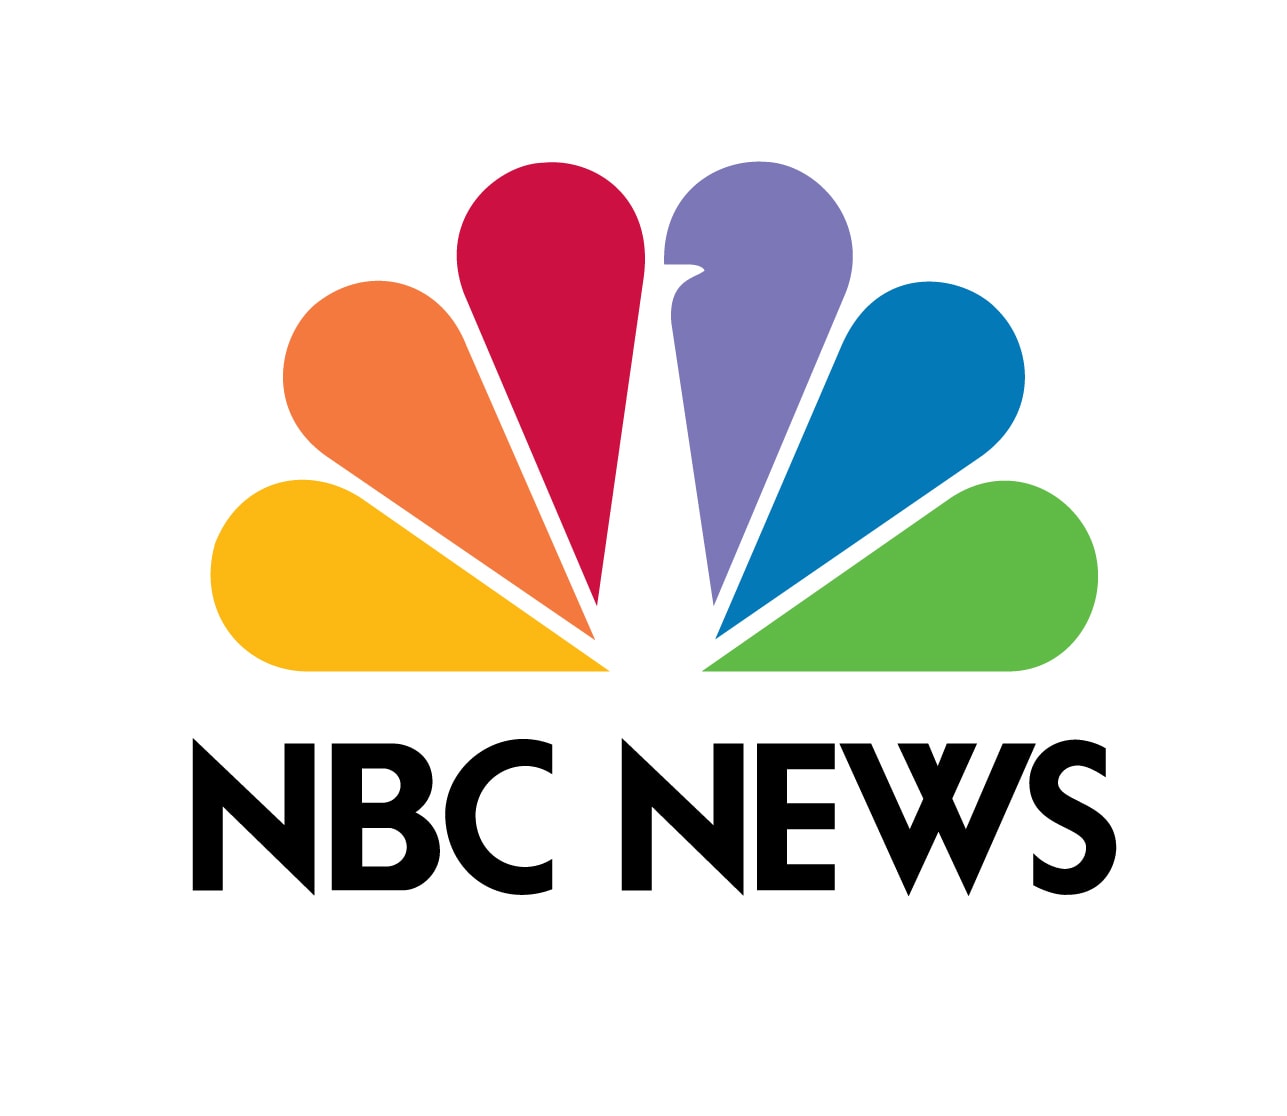 About NBC News Digital